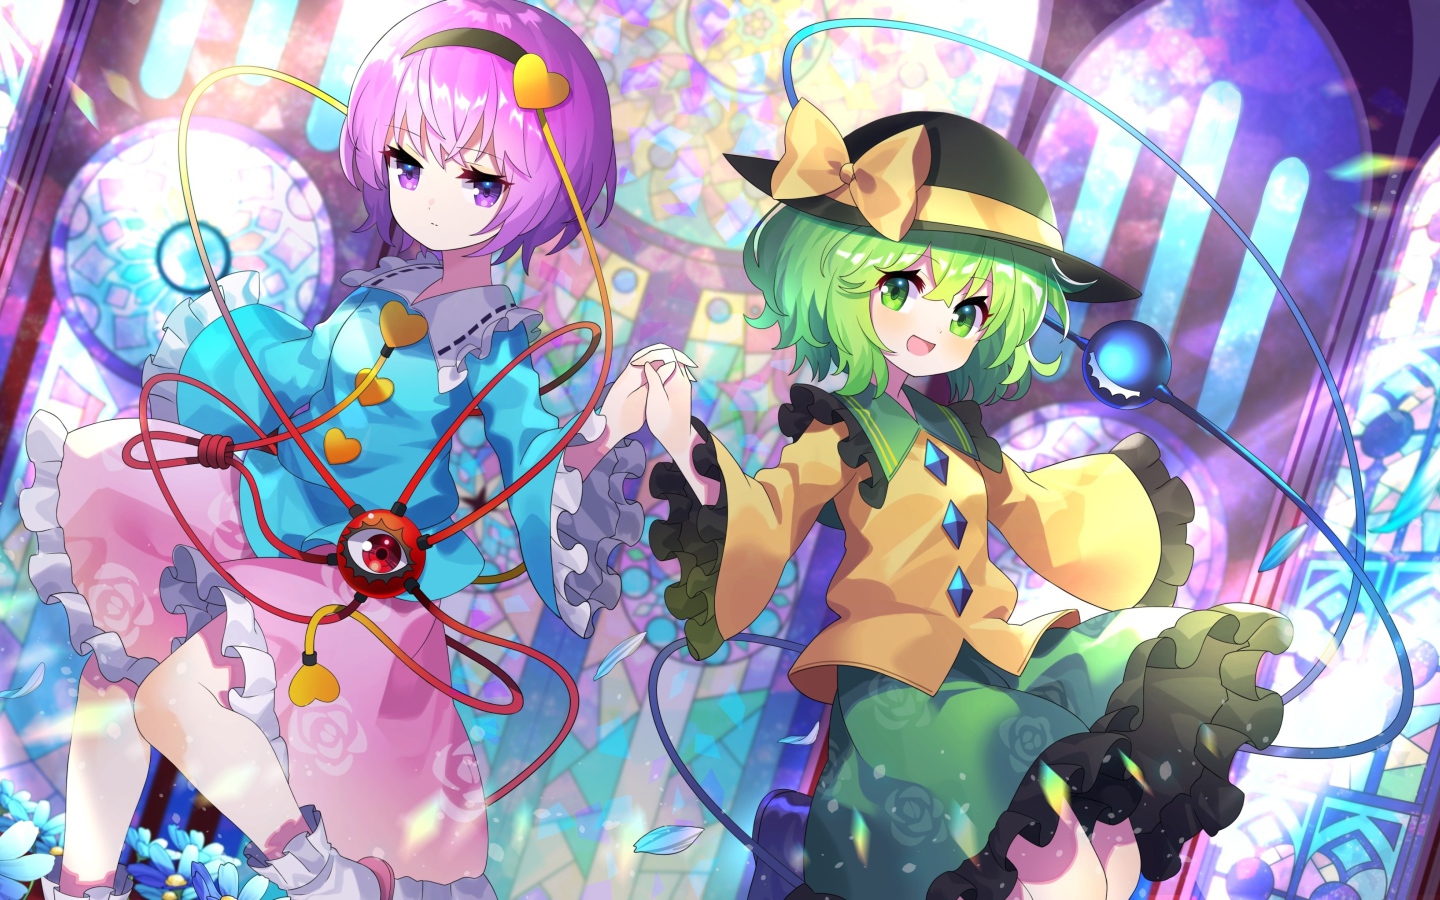 Anime girls Koishi Komeiji and Satori Komeiji in colorful outfits